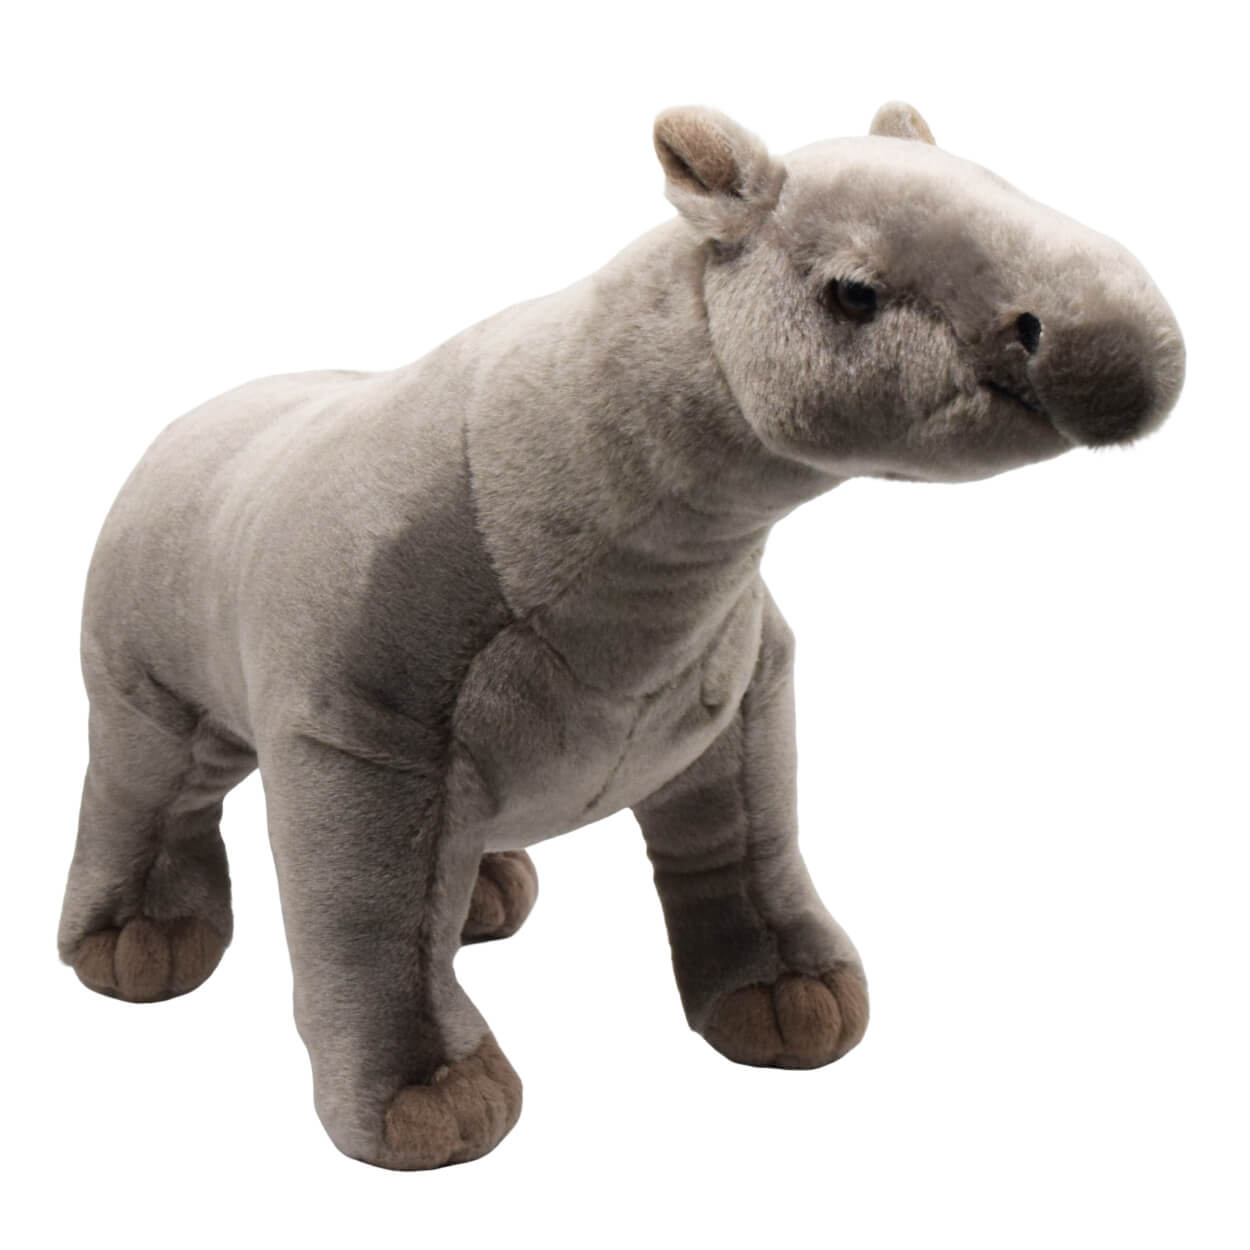 Realistic Near Horn Beast Stuffed Animal Plush Toy